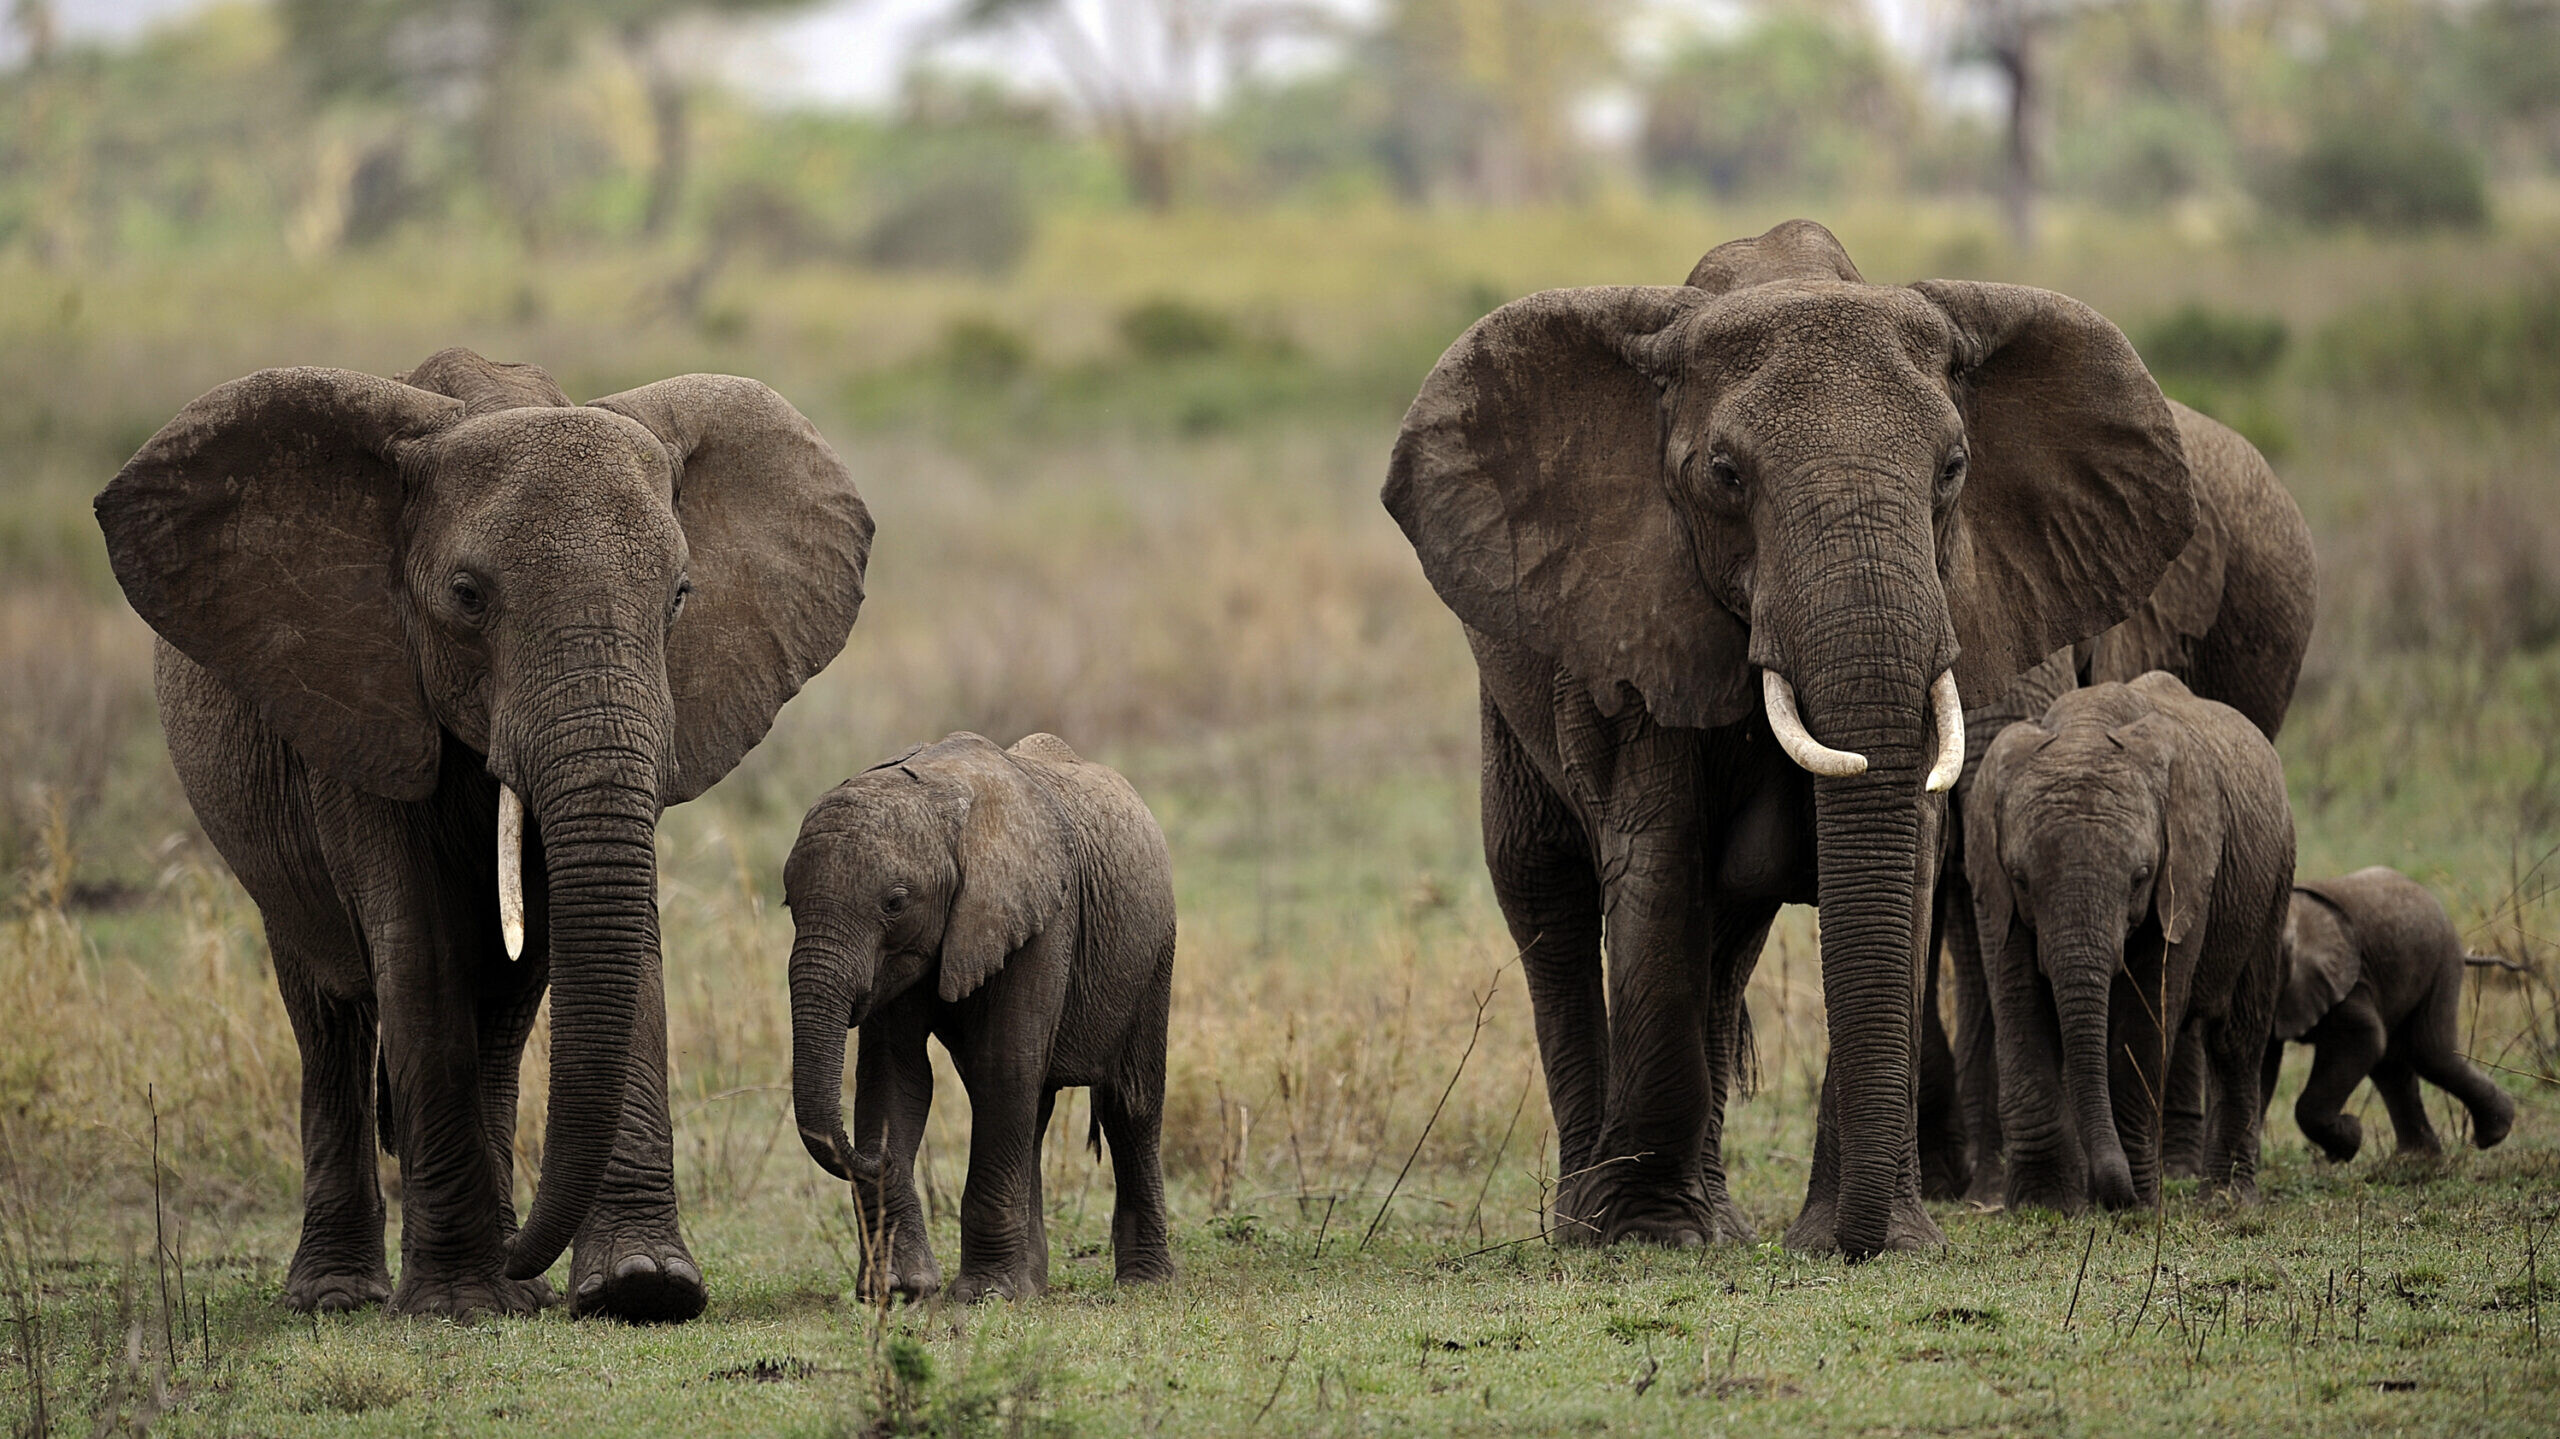 elephant lifespan in wild